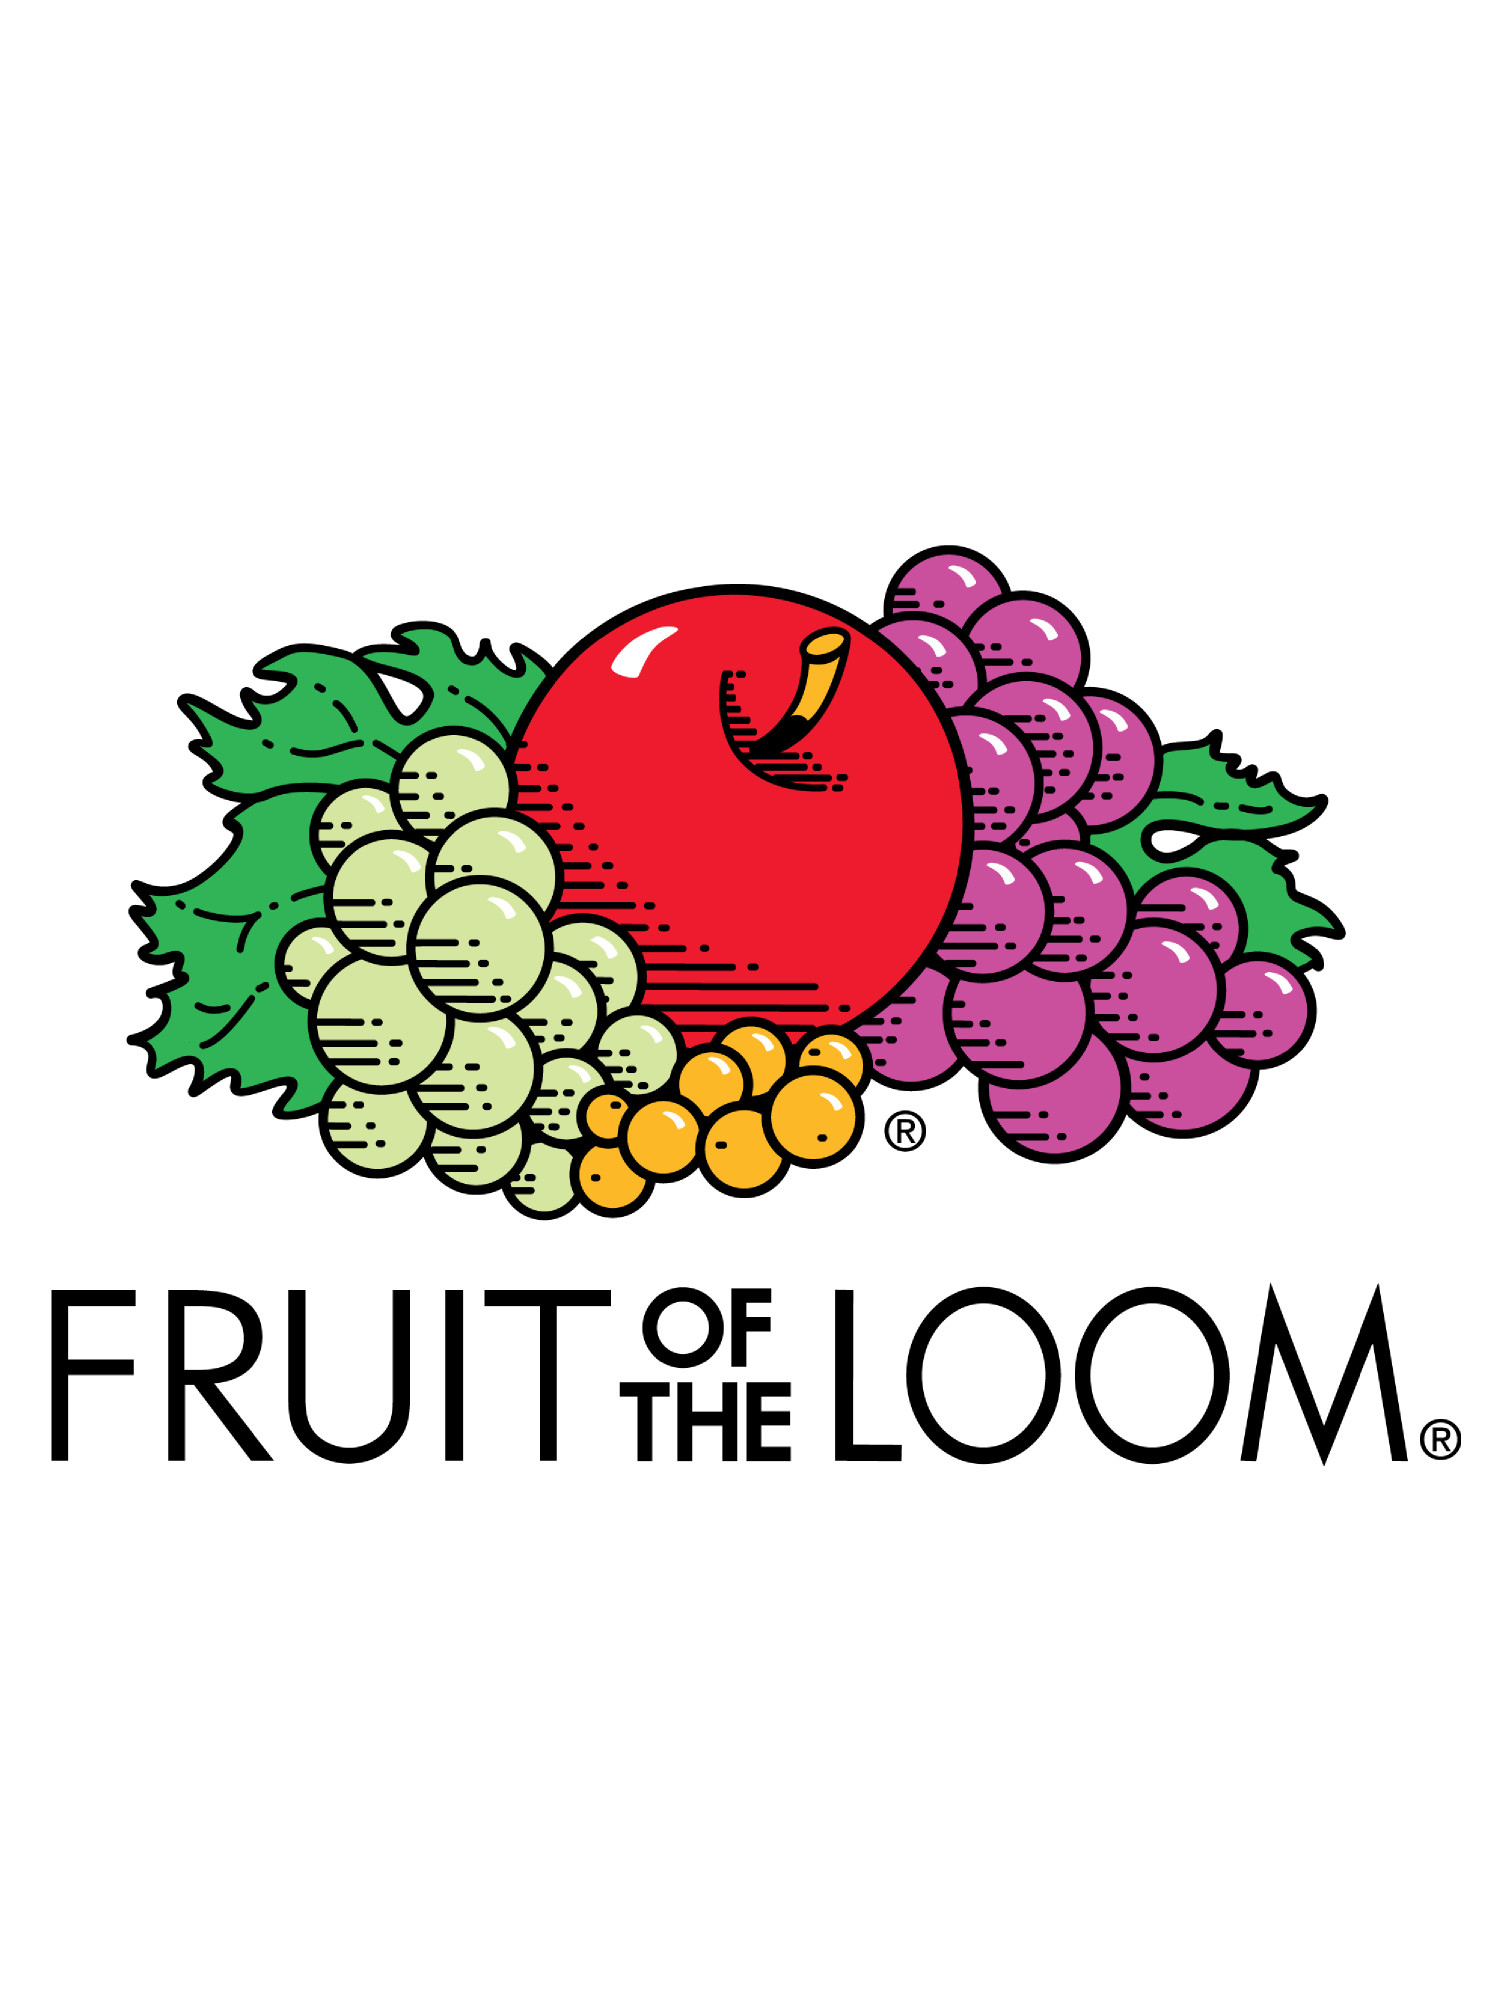 Fruit of the Loom Men's White A-Shirts, 6+6 Bonus Pack - image 5 of 5